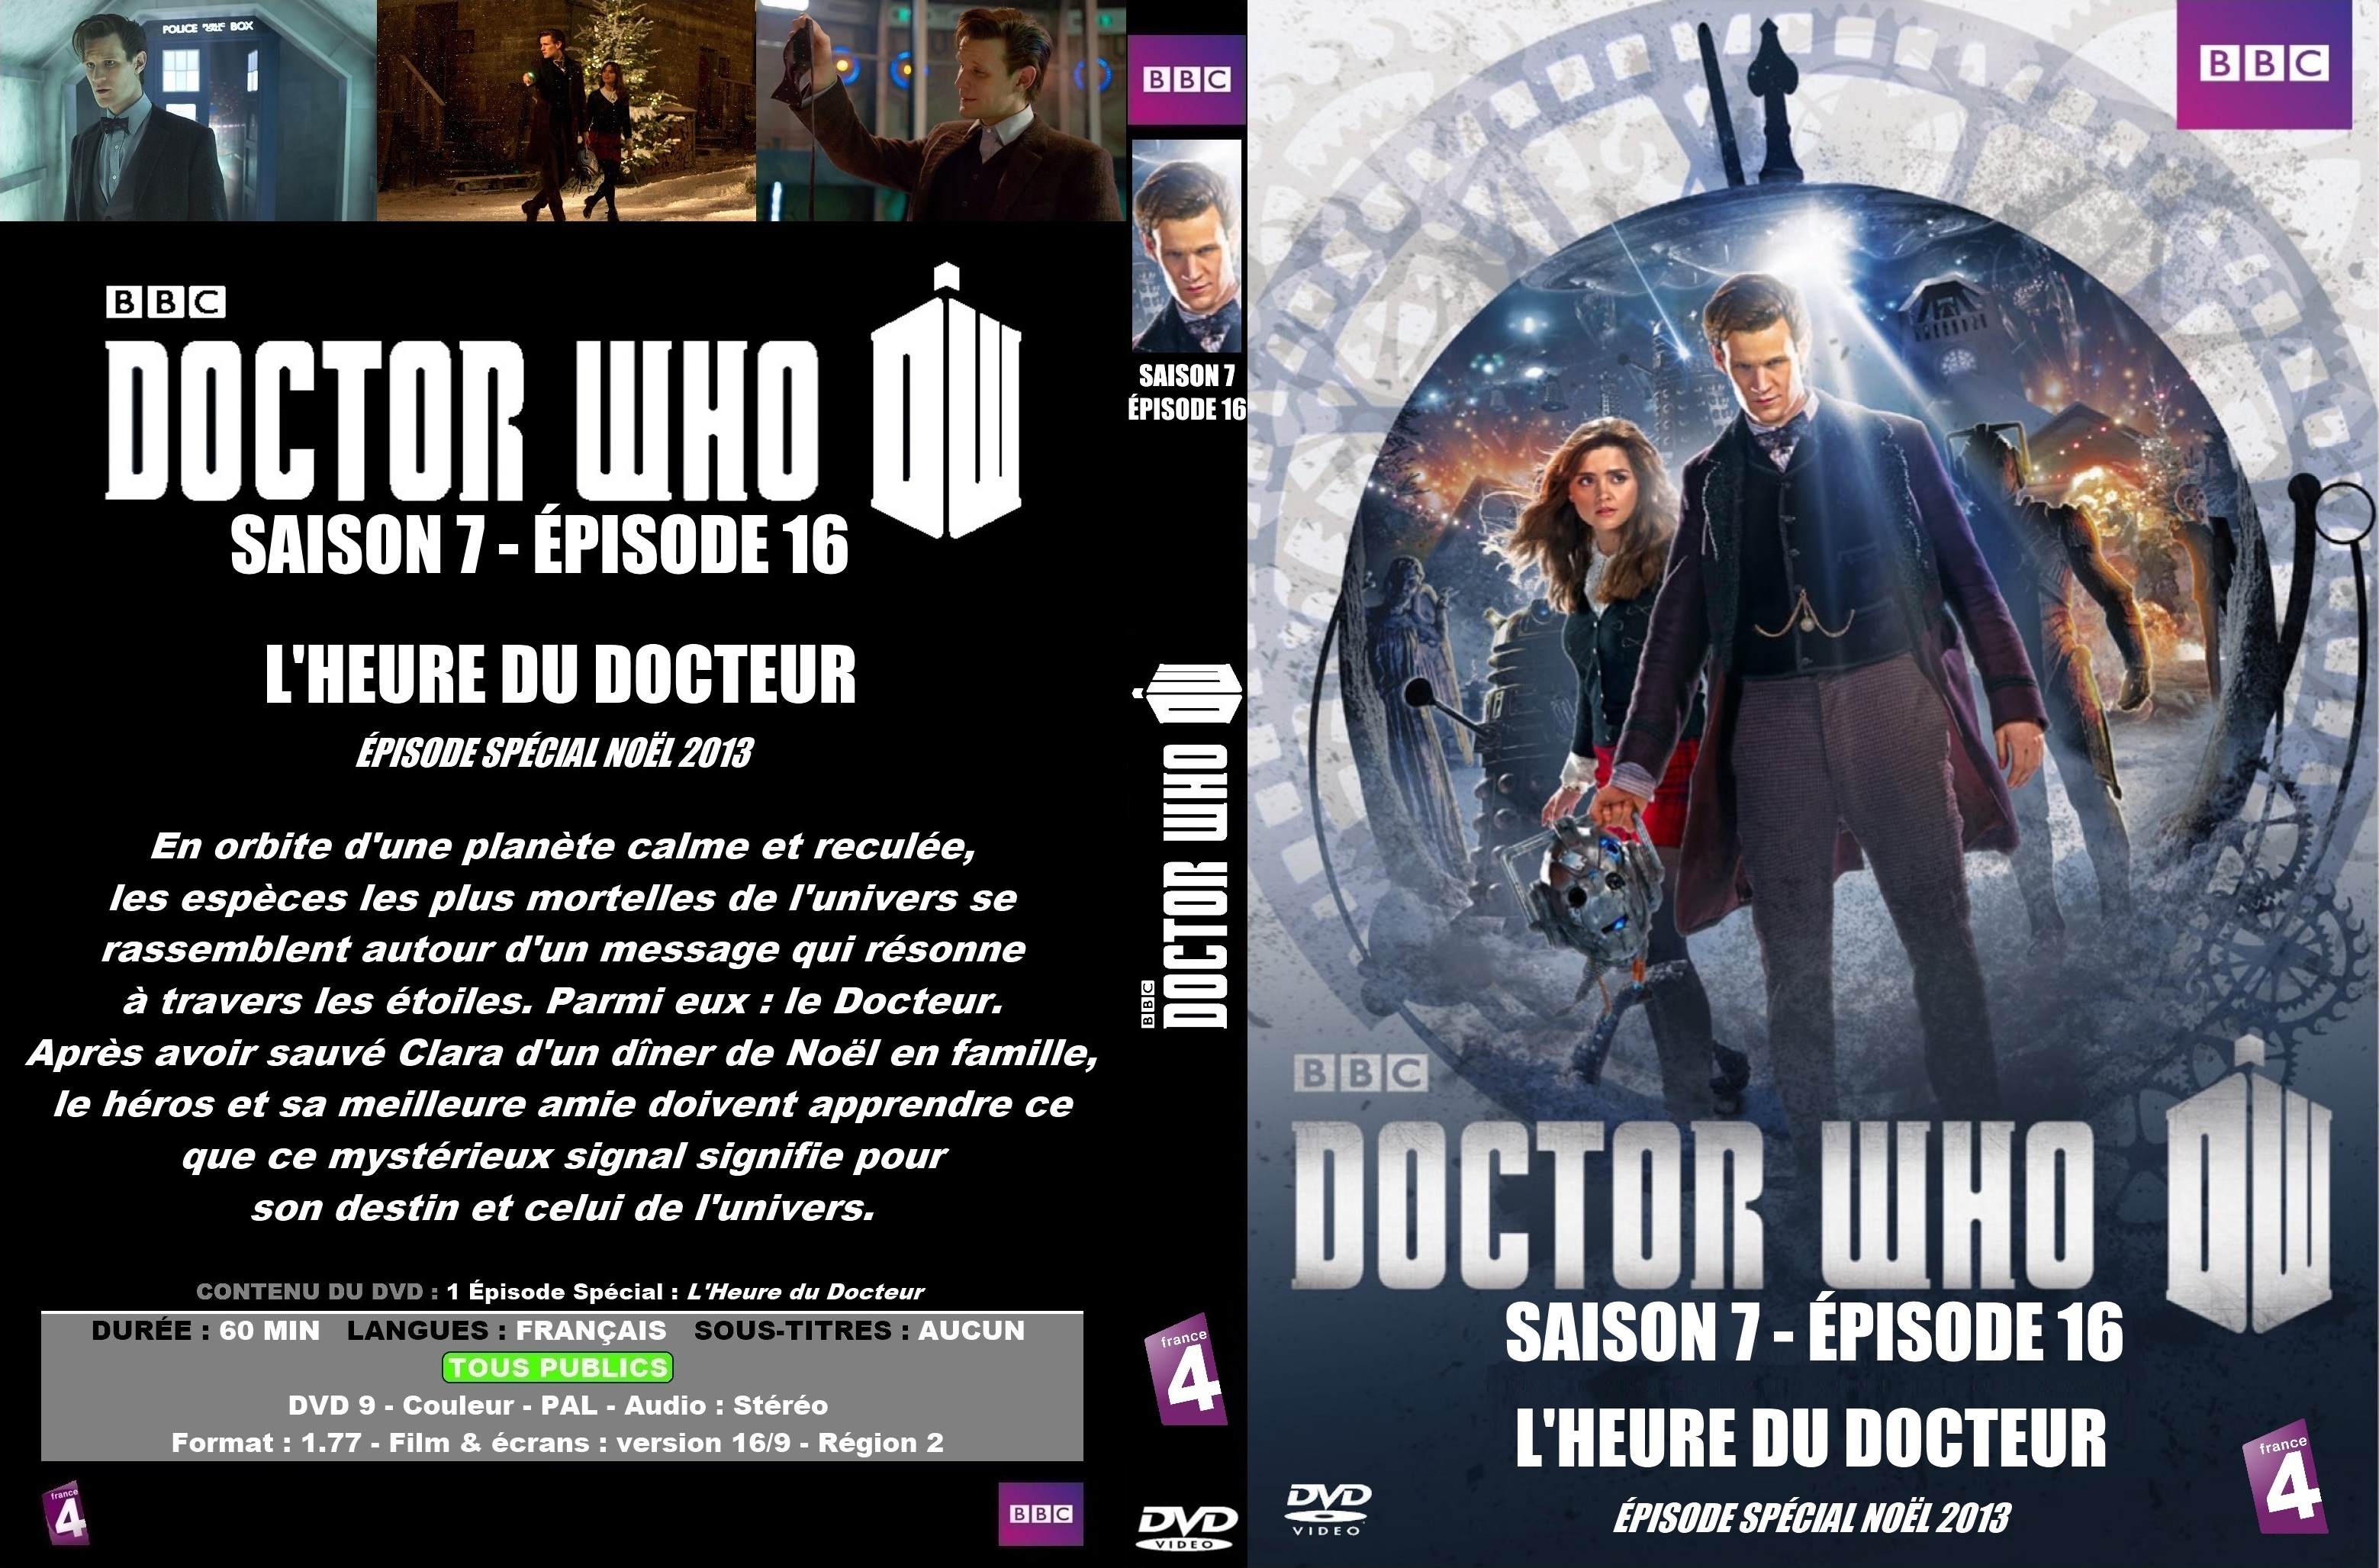 Jaquette DVD Doctor Who Saison 7 Episode 16 custom